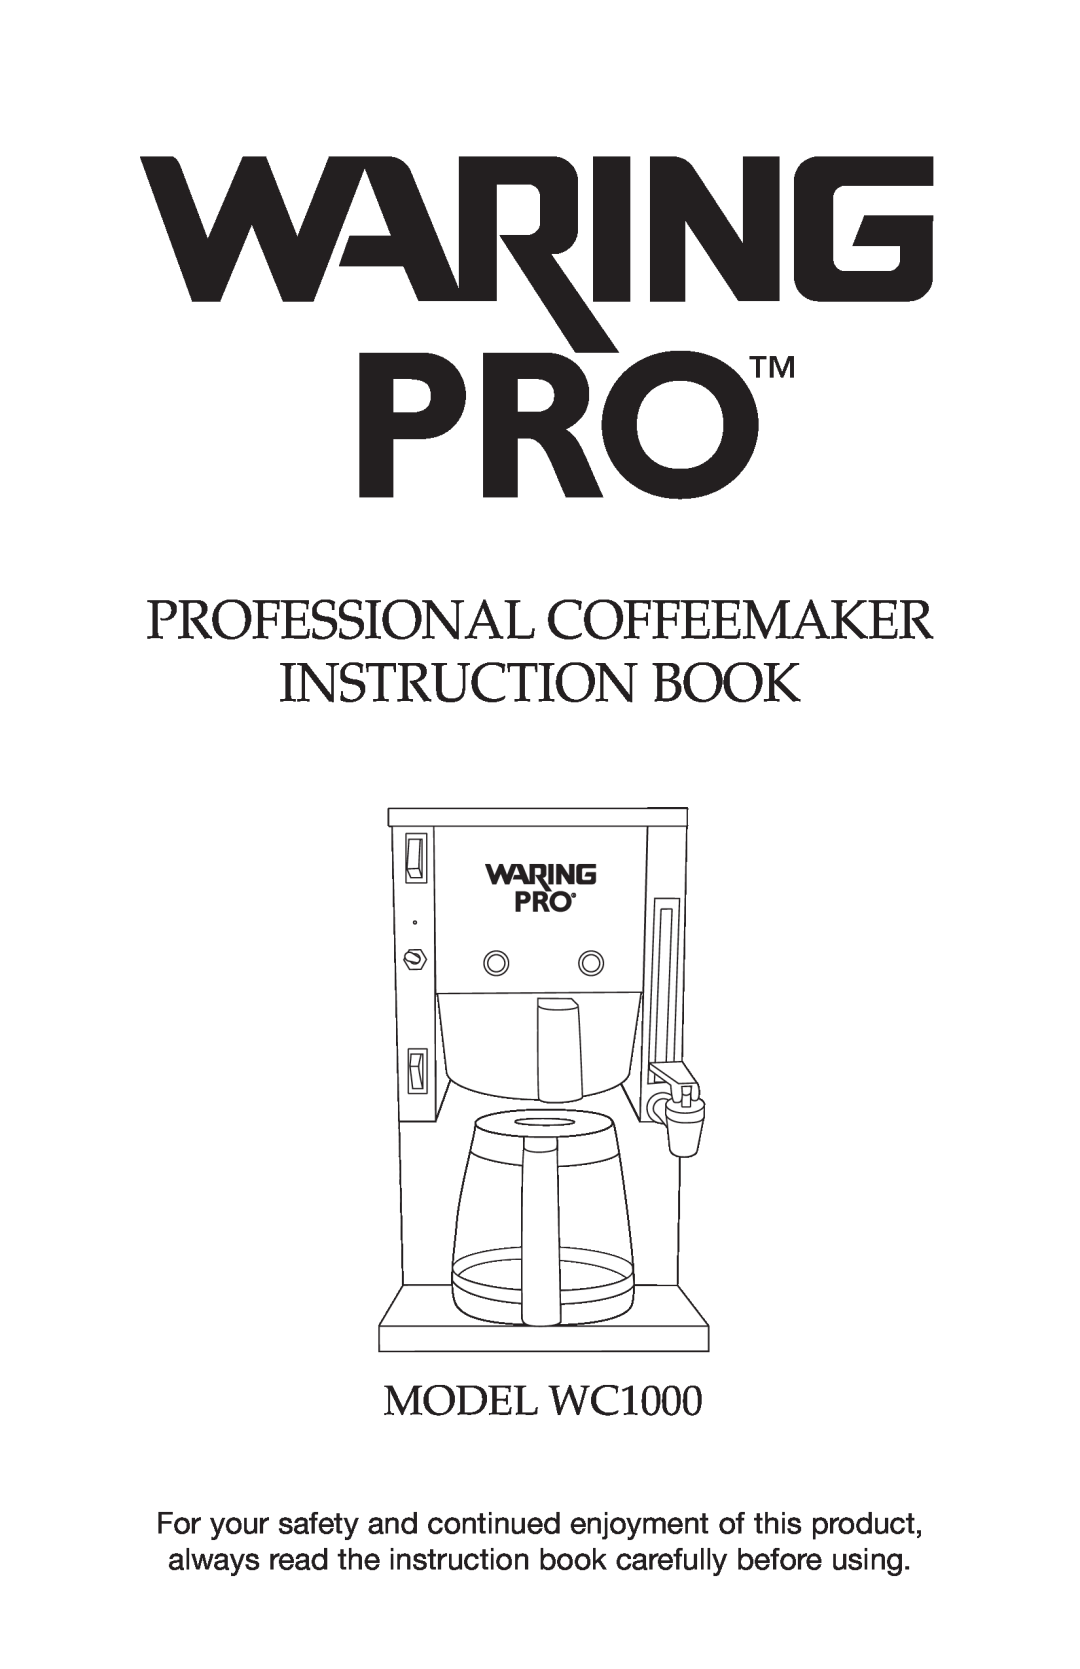 Waring manual Professional COFFEEMAKER INSTRUCTION BOOK, MODEL WC1000 